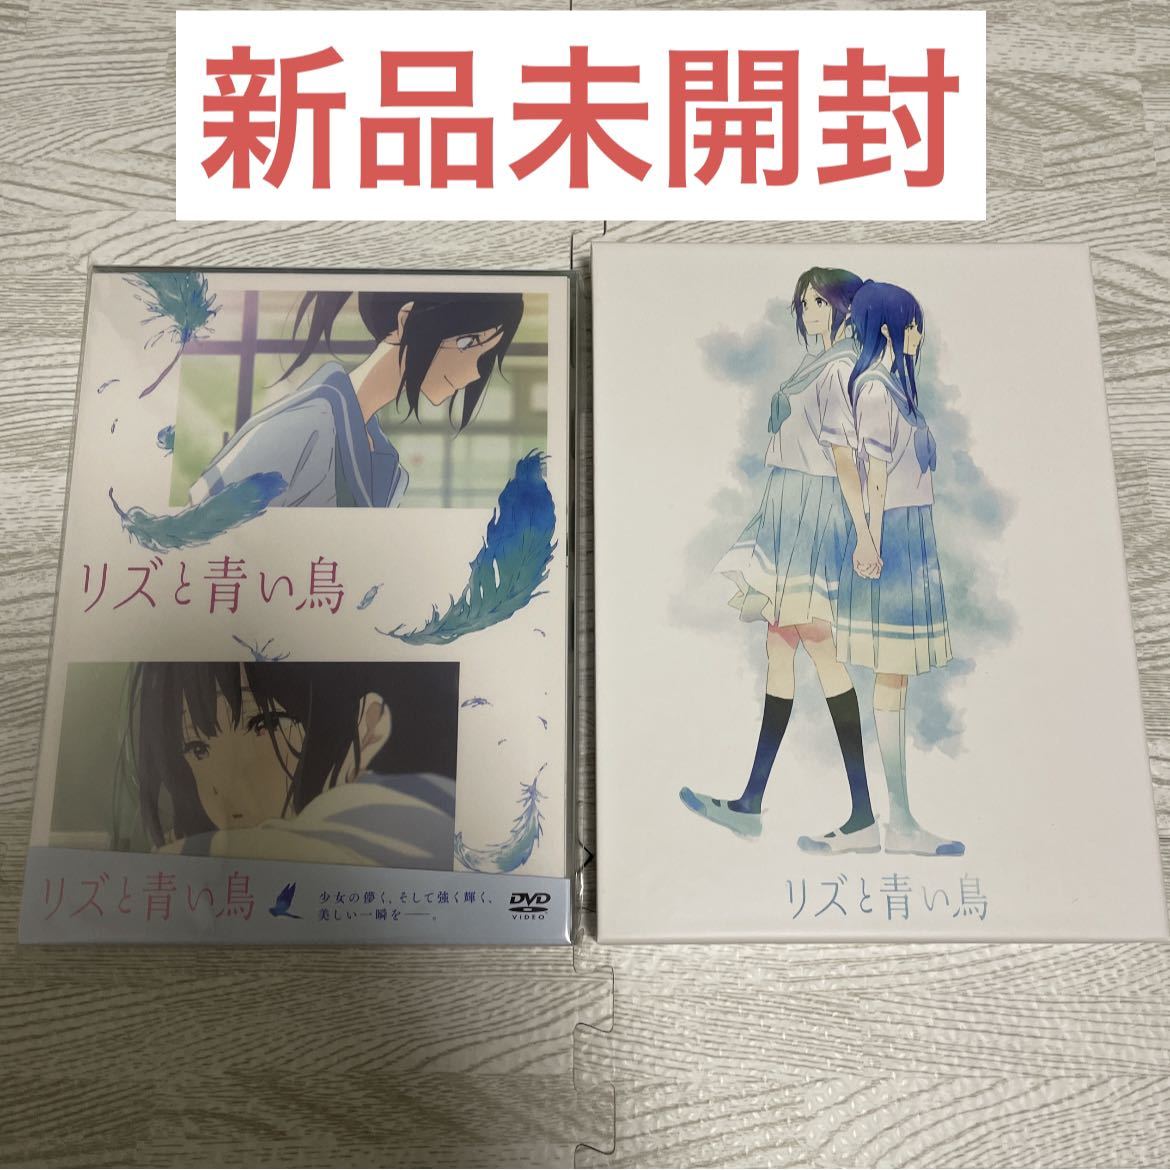 新品未開封 リズと青い鳥 DVD 初回版 amazon co jp 購入特典 収納BOX付